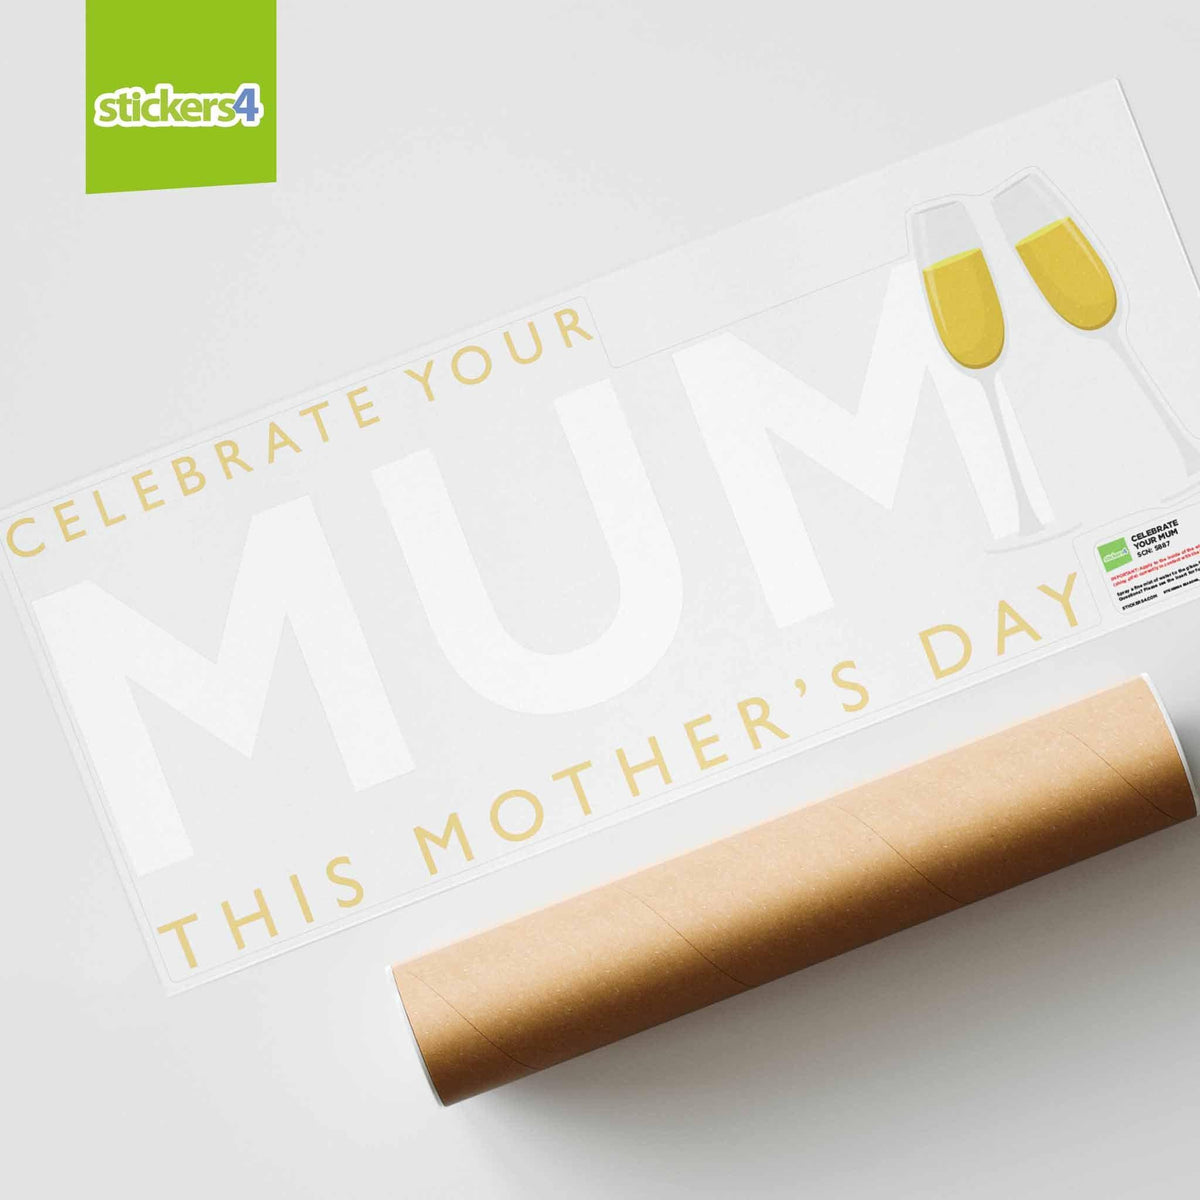 Celebrate Your Mum Window Sticker